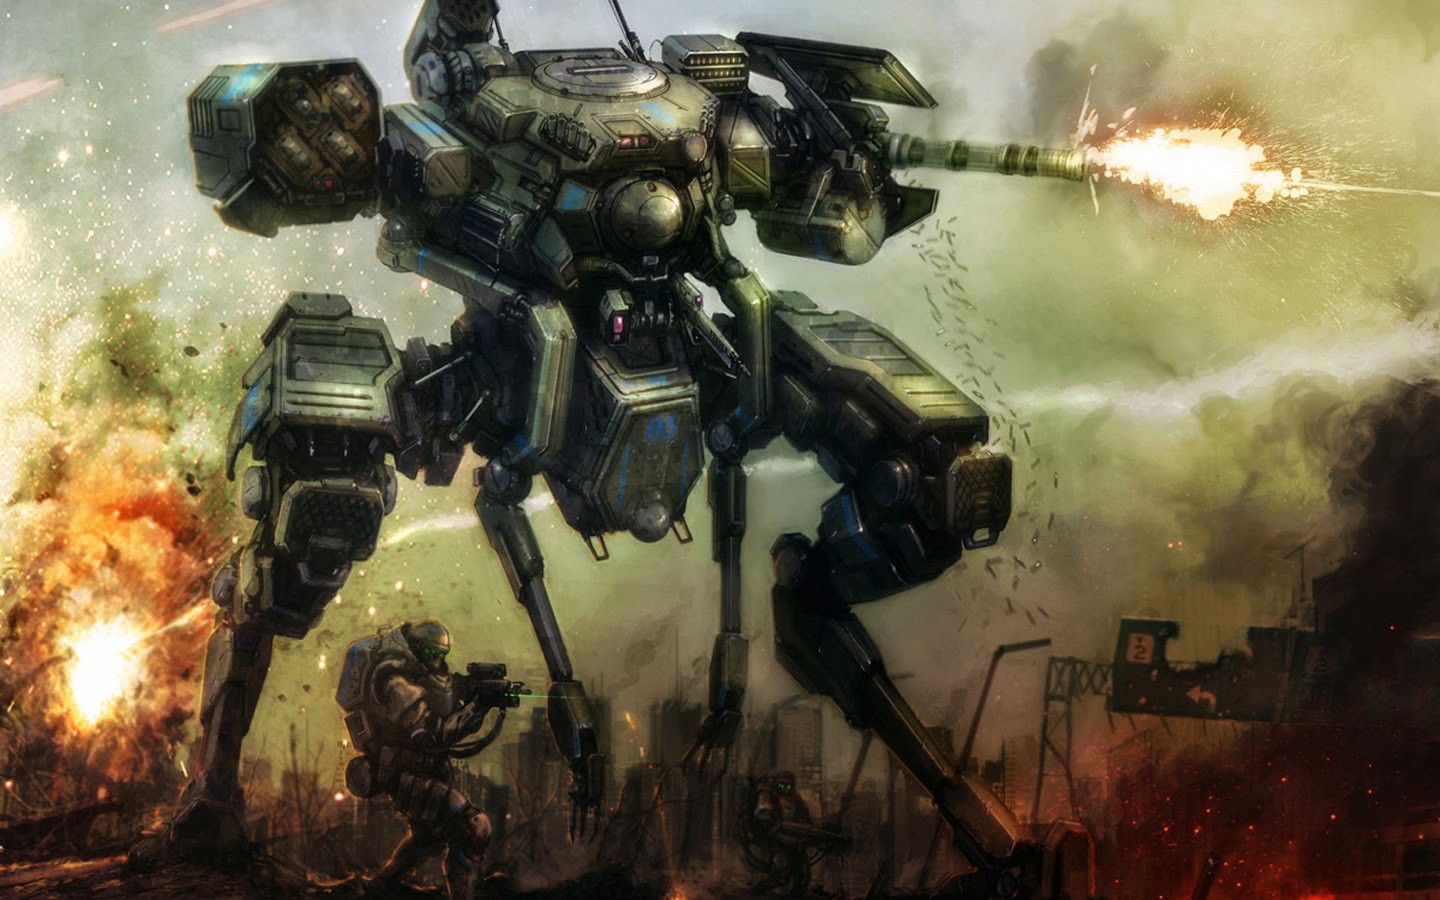 General 1440x900 futuristic science fiction robot dystopian artwork battle explosion